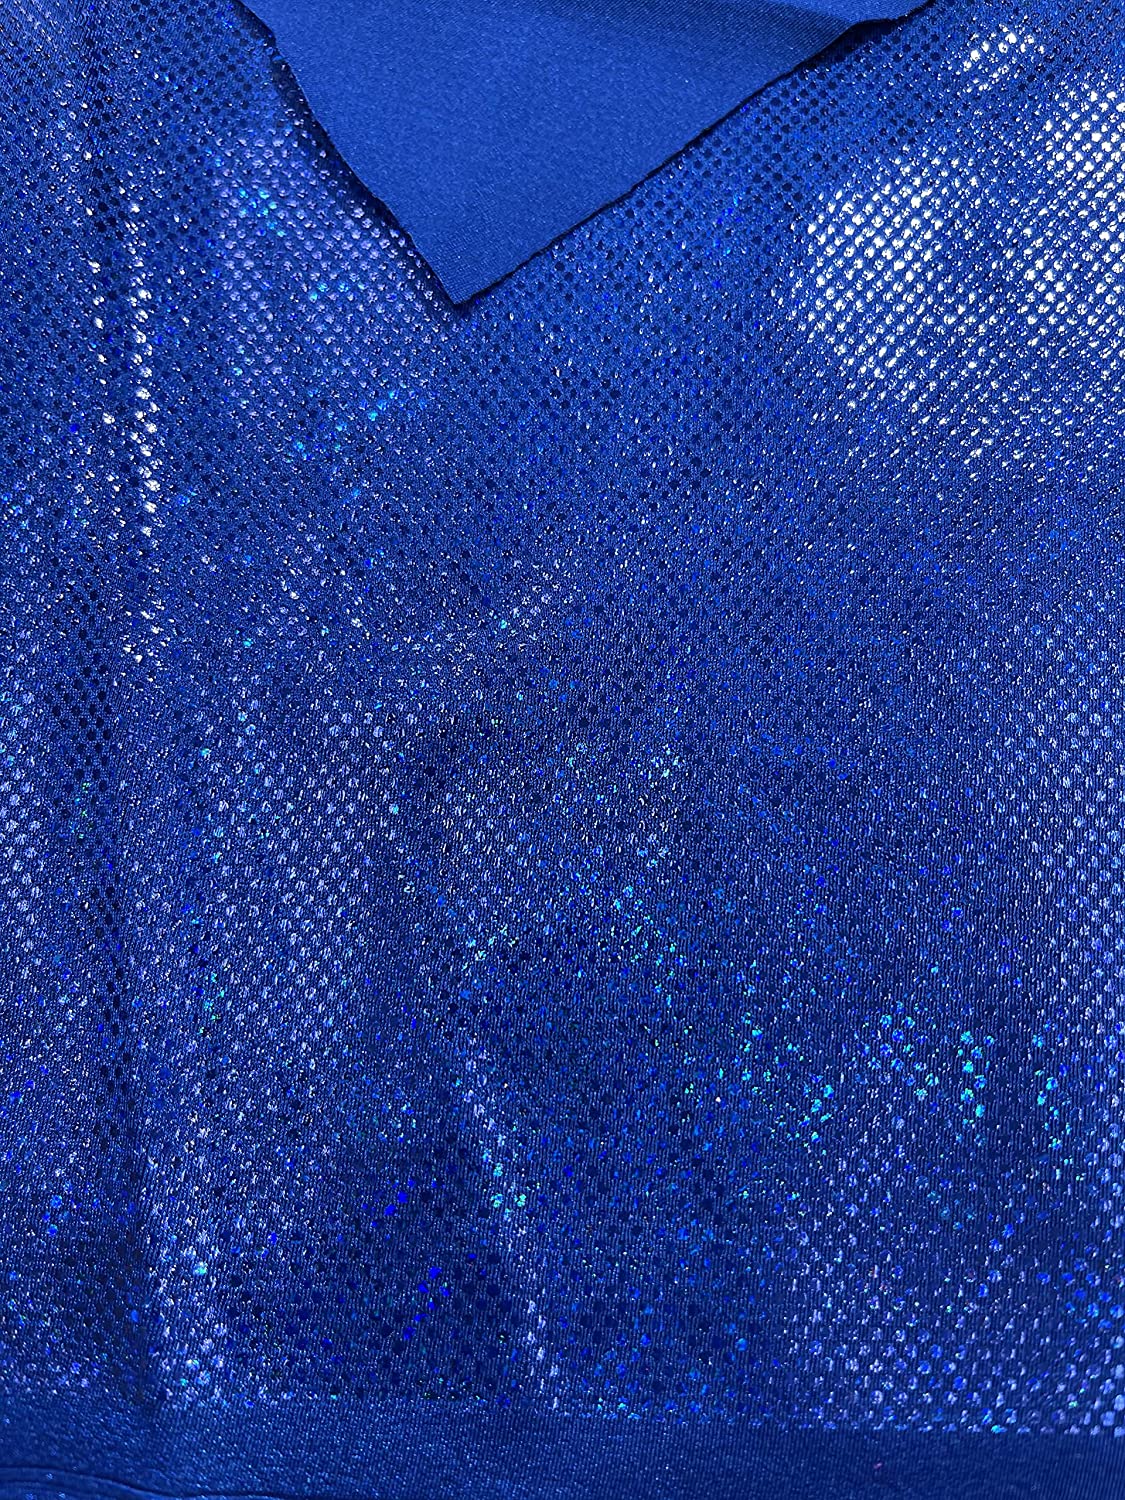 Shattered Glass Foil Iridescent Hologram Dancewear 4 Way Stretch Spandex Nylon Tricot Fabric (1 Yard, Dark Royal Blue)